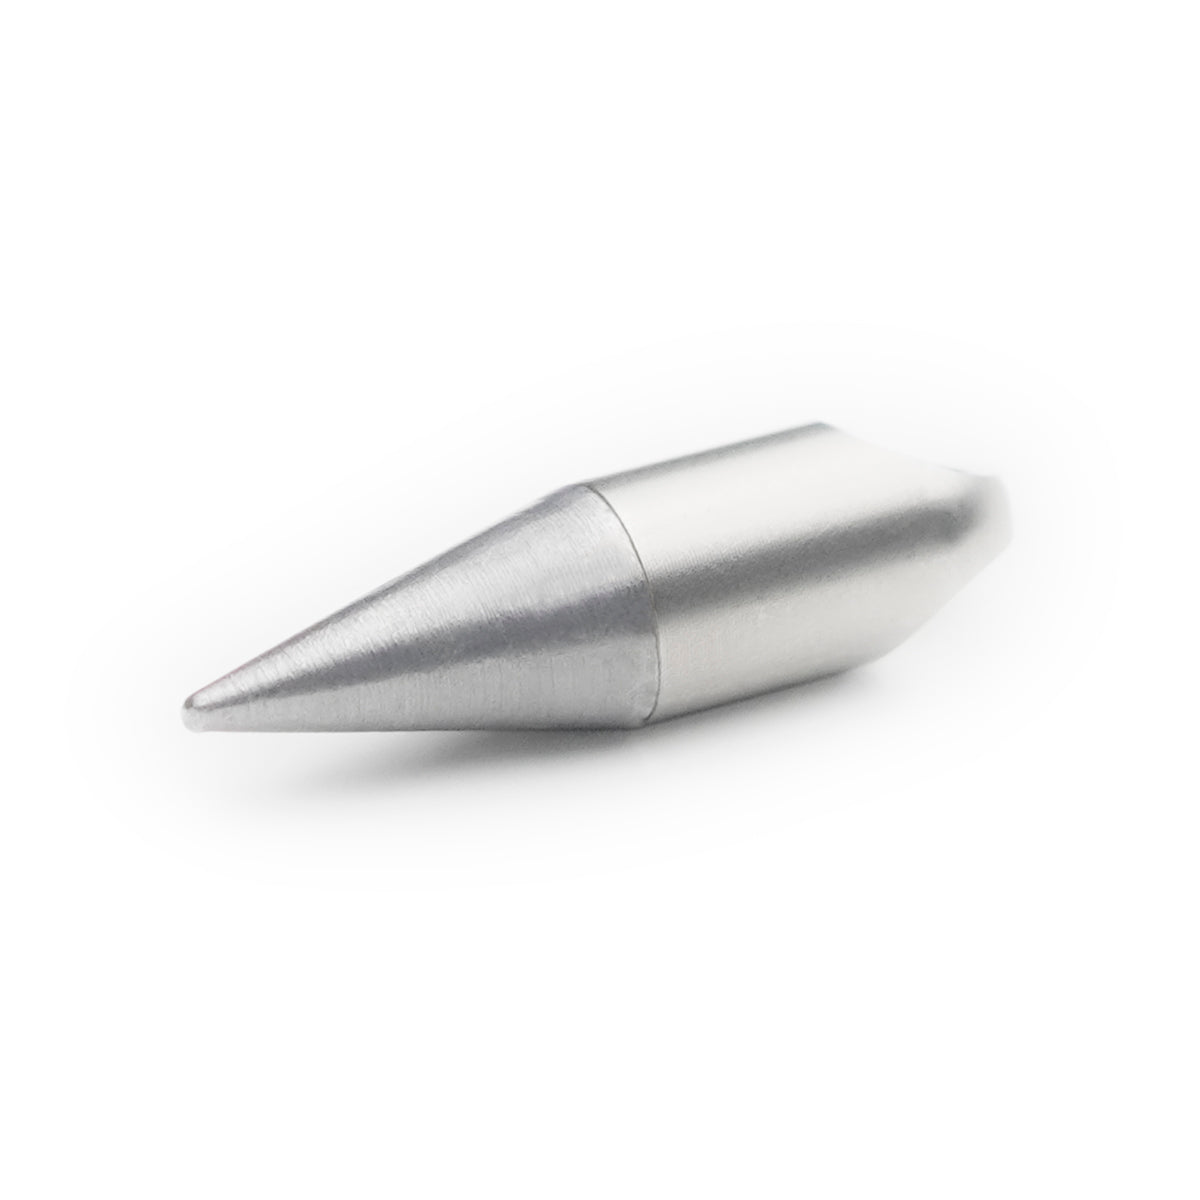 The ForeverPen Is The World's Smallest Inkless Pen - IMBOLDN